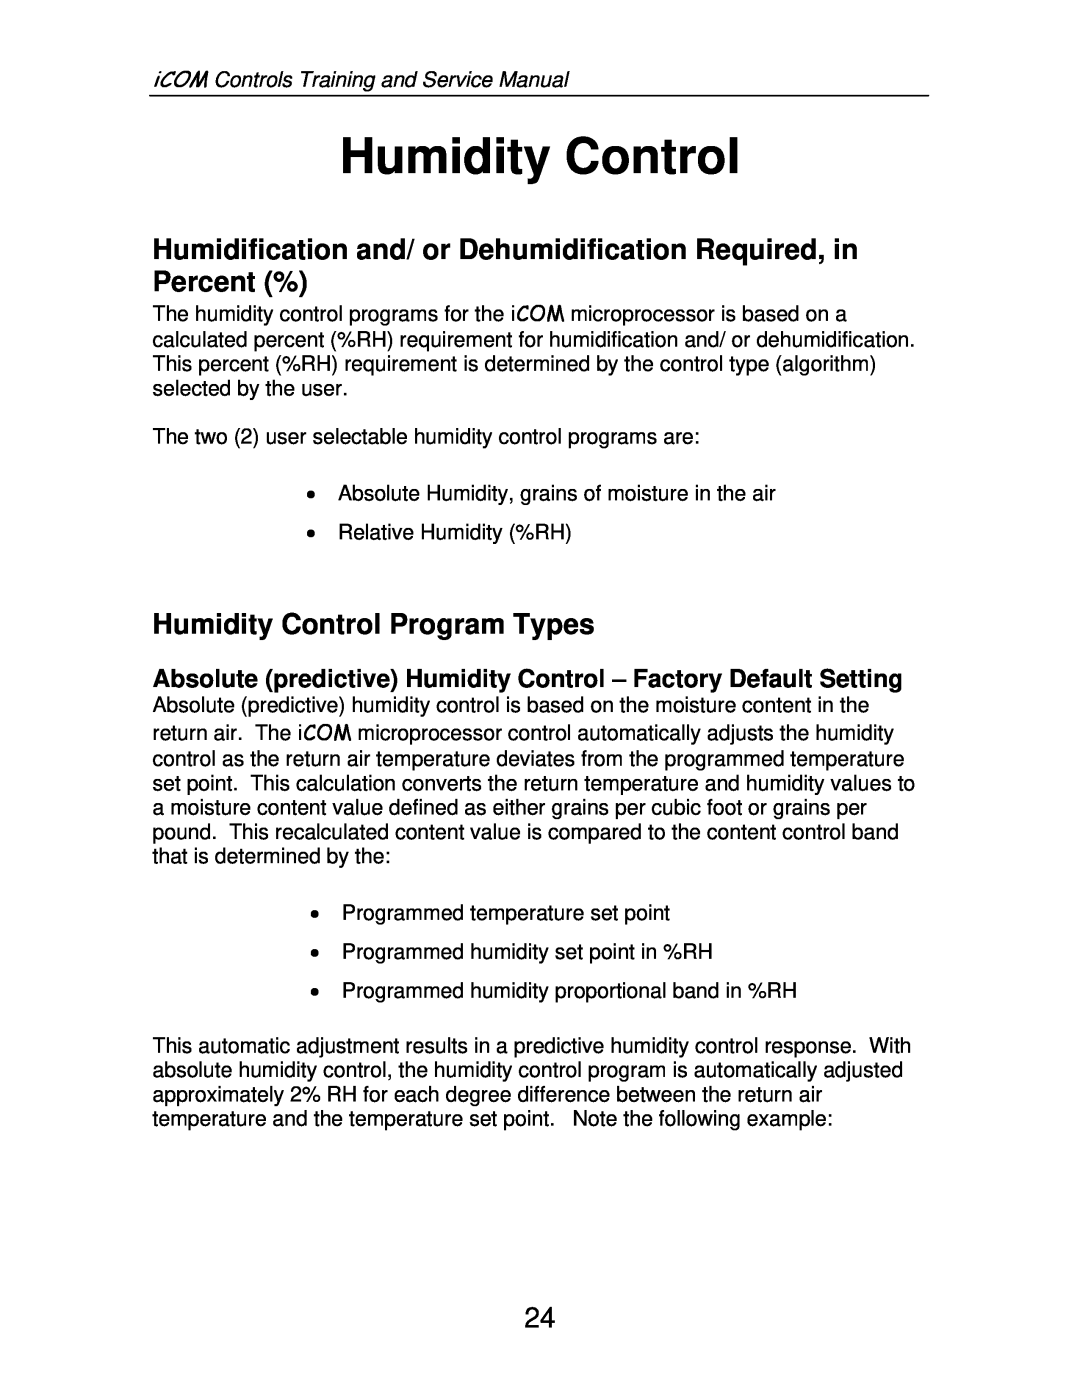 Liebert TM-10098 service manual Humidity Control Program Types, iCOM Controls Training and Service Manual 